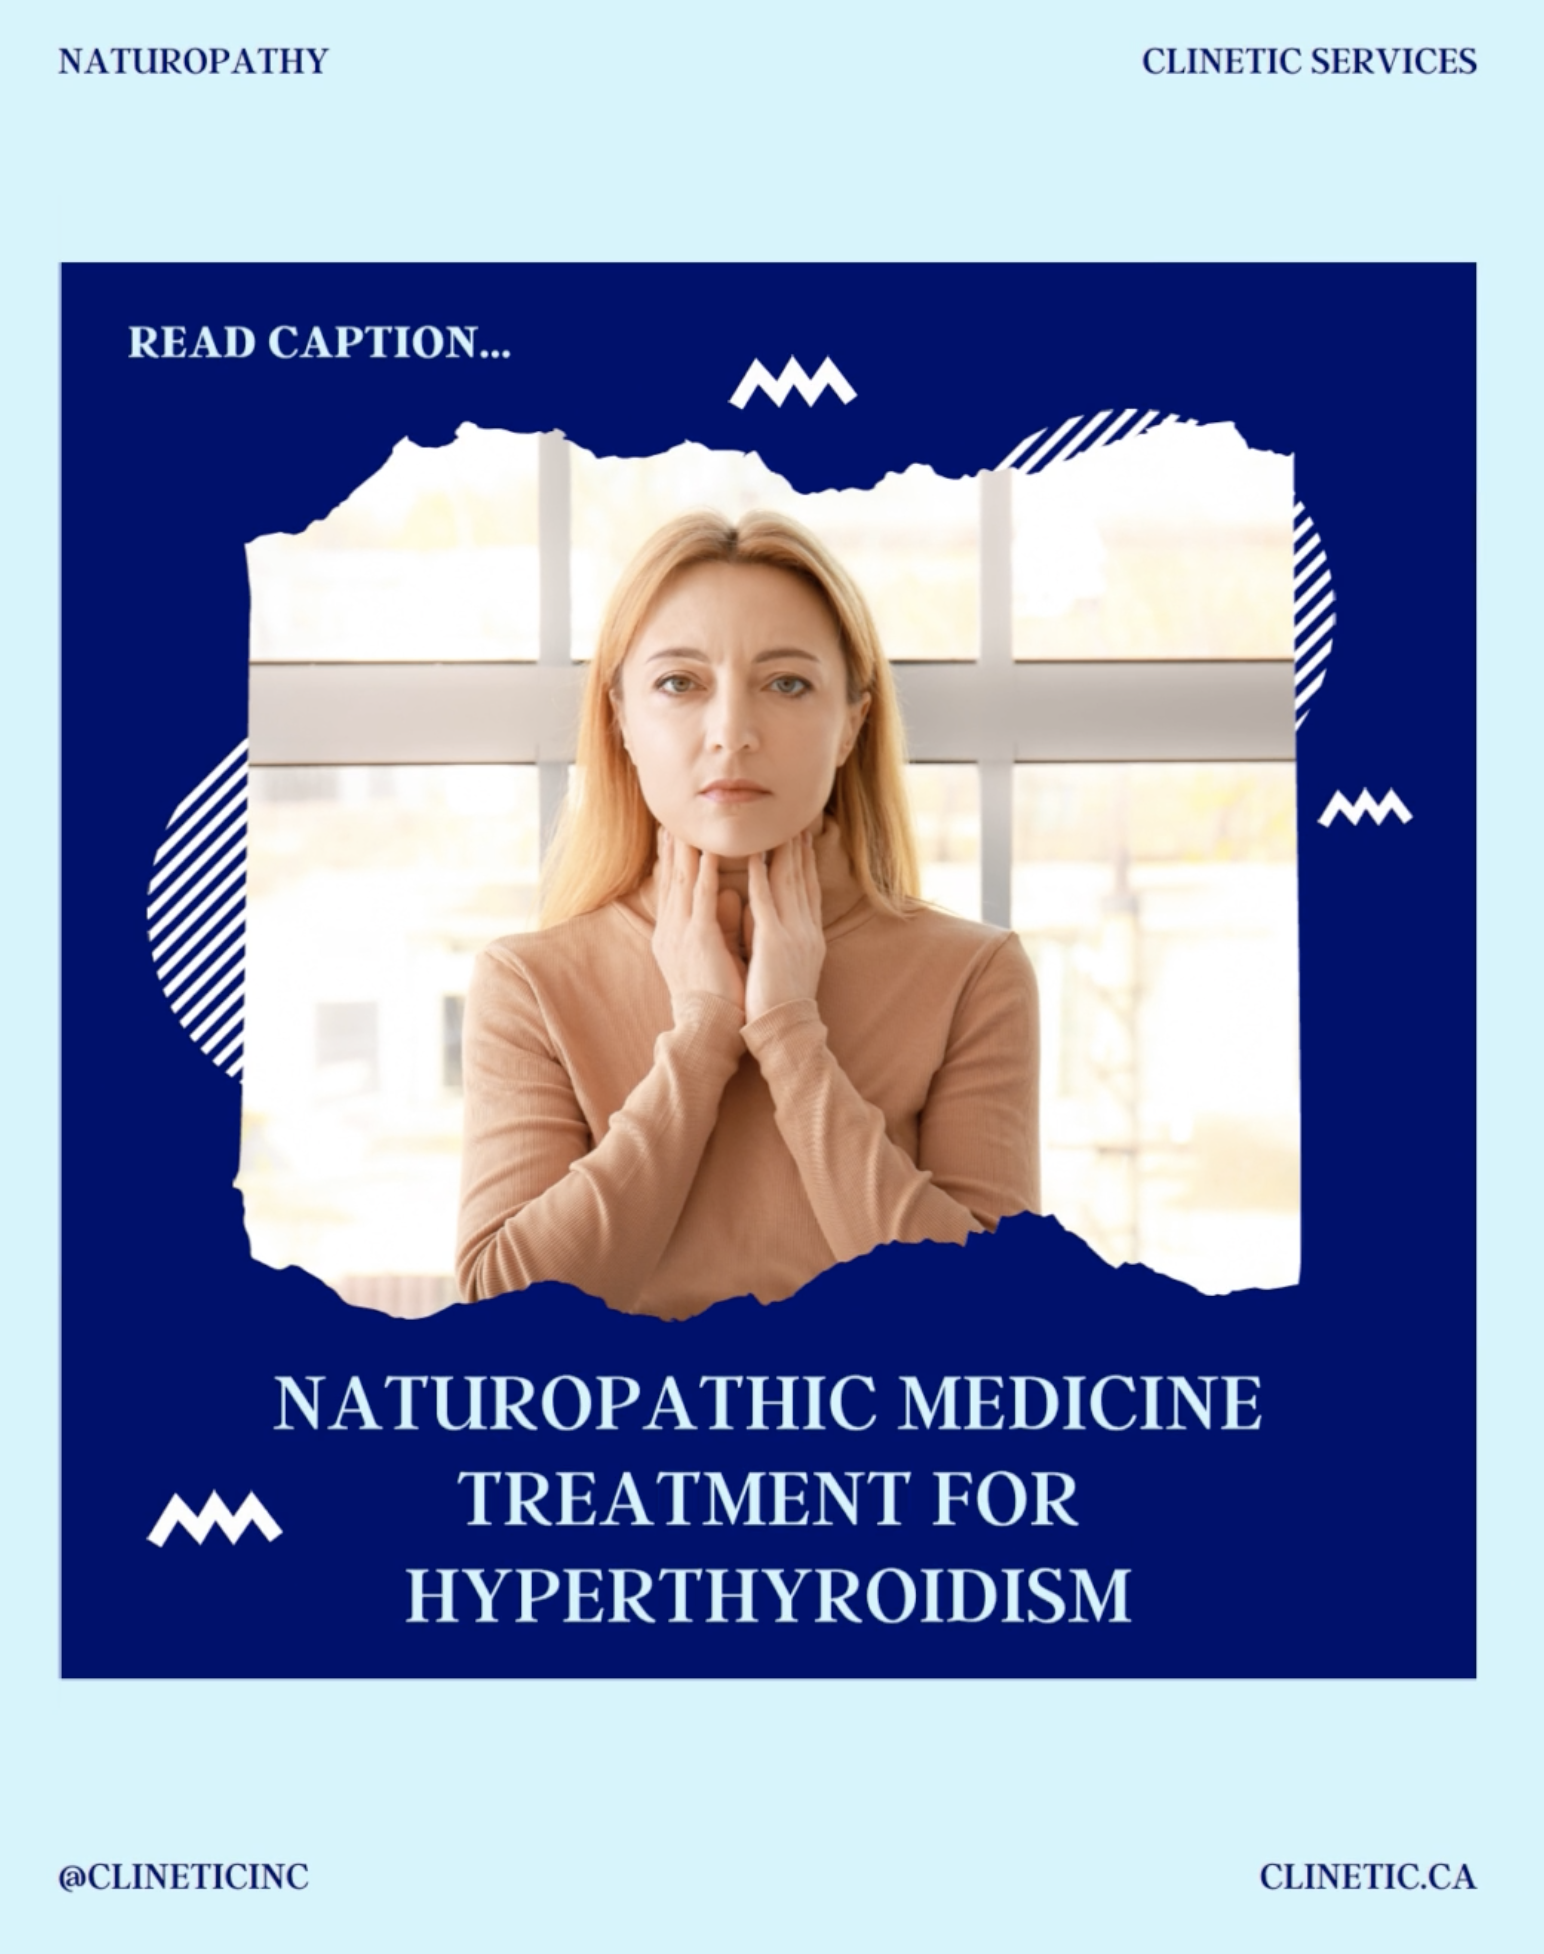 Naturopathic medicine treatment for Hyperthyroidism